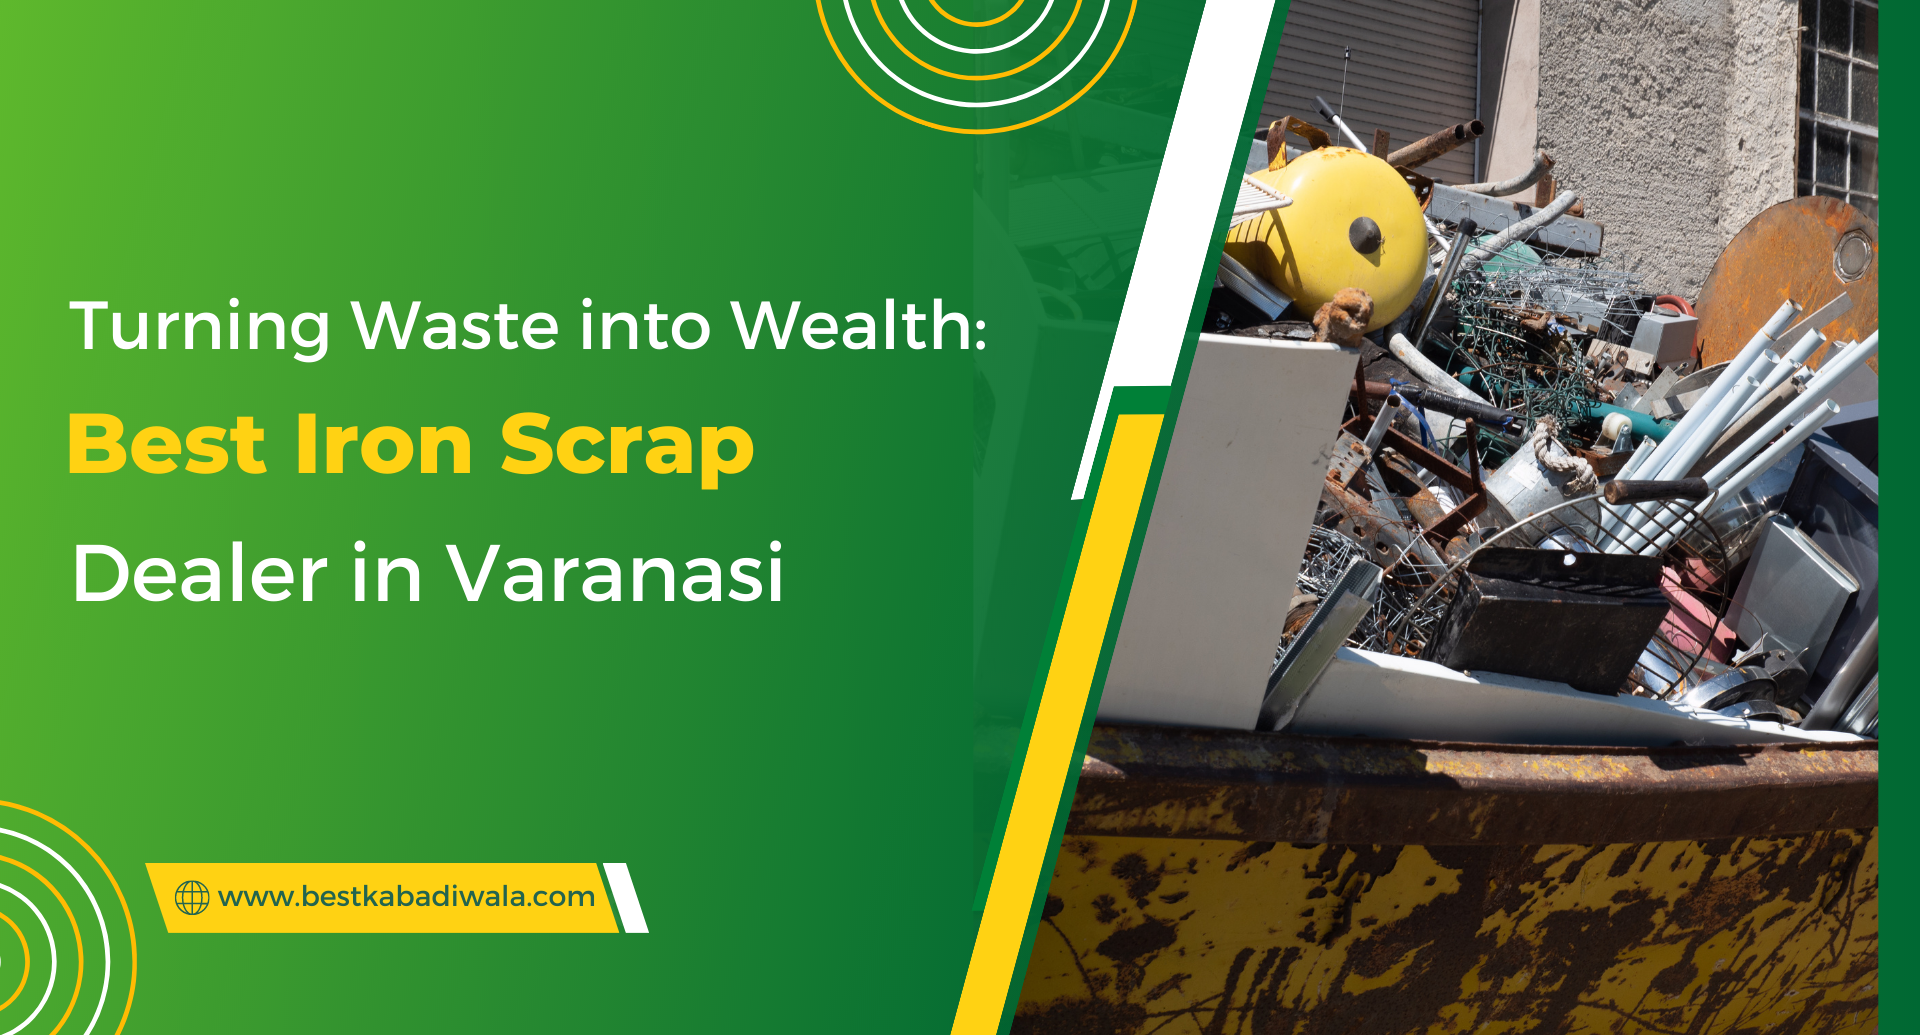 Best Iron Scrap Dealer in Varanasi